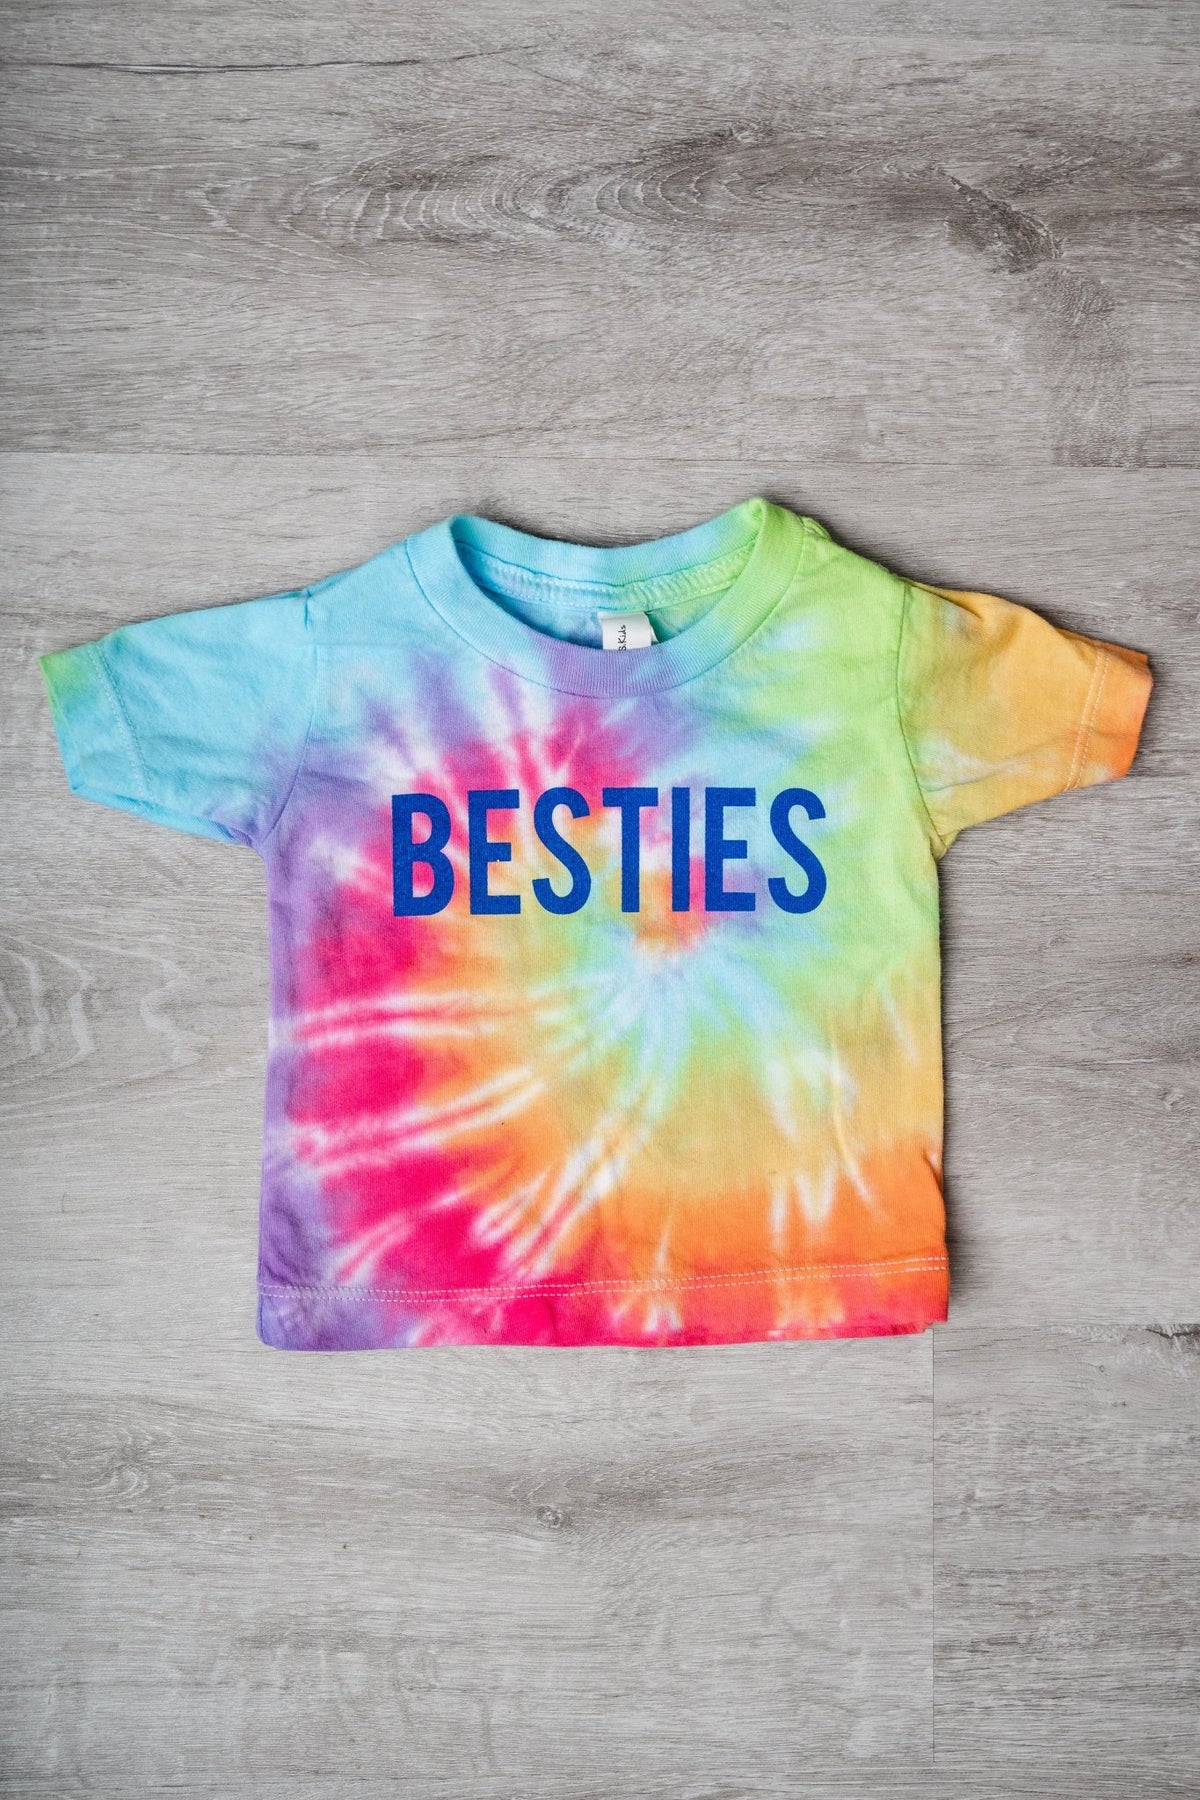 KIDS Besties tie dye t-shirt - Tie Dye T-shirts - Tie Dye Clothing at Lush Fashion Lounge Trendy Boutique in Oklahoma City